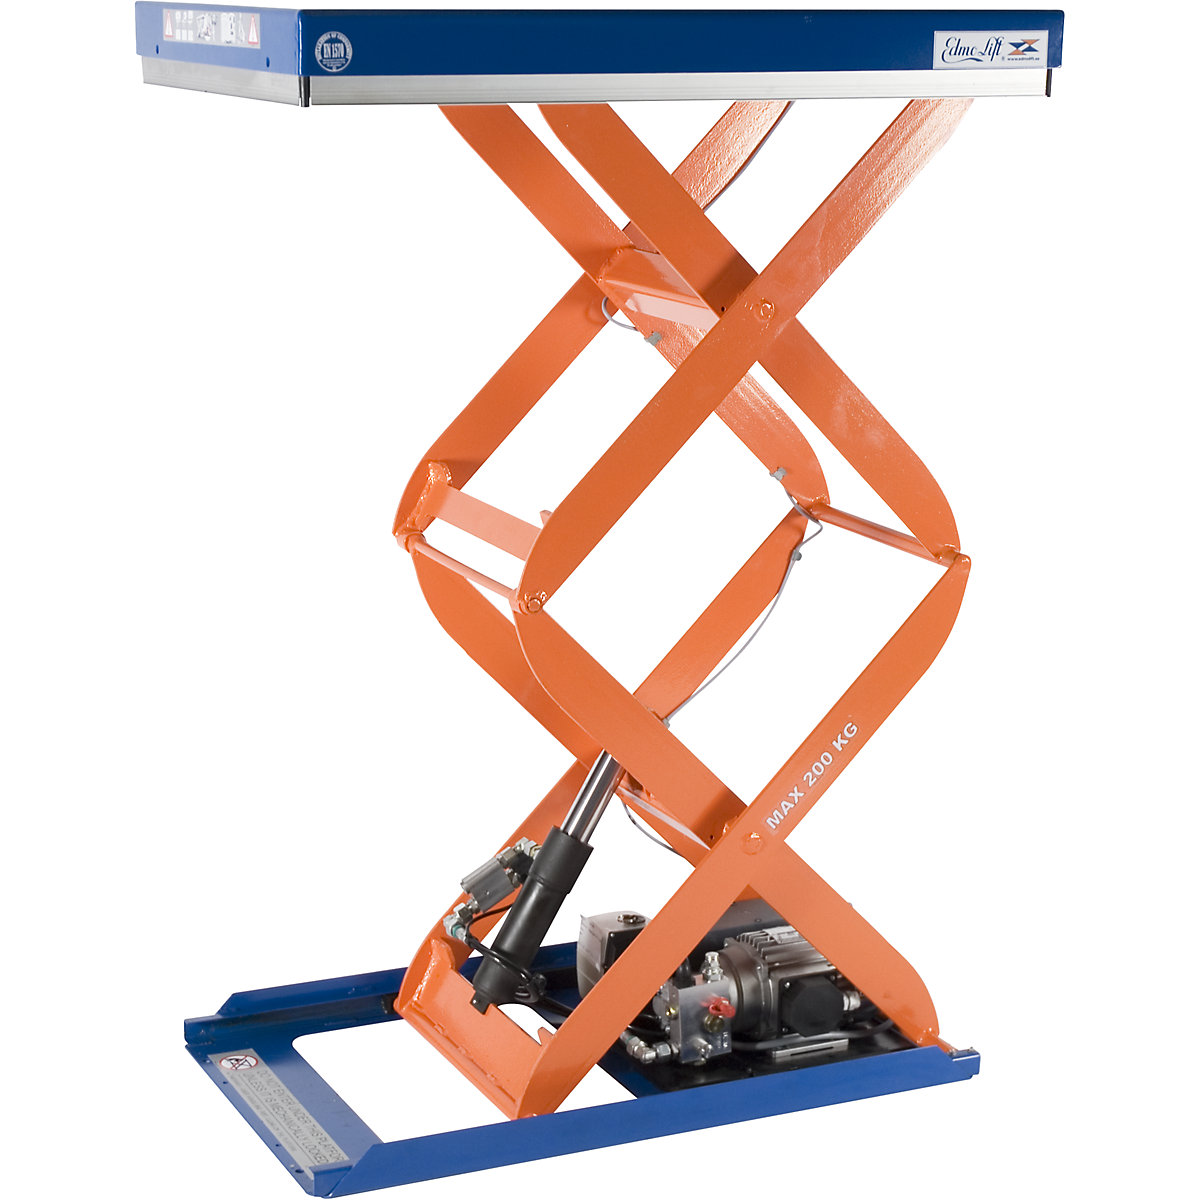 Compact lift table, static – Edmolift, max. load 200 kg, platform LxW 900 x 600 mm, effective lift 1170 mm